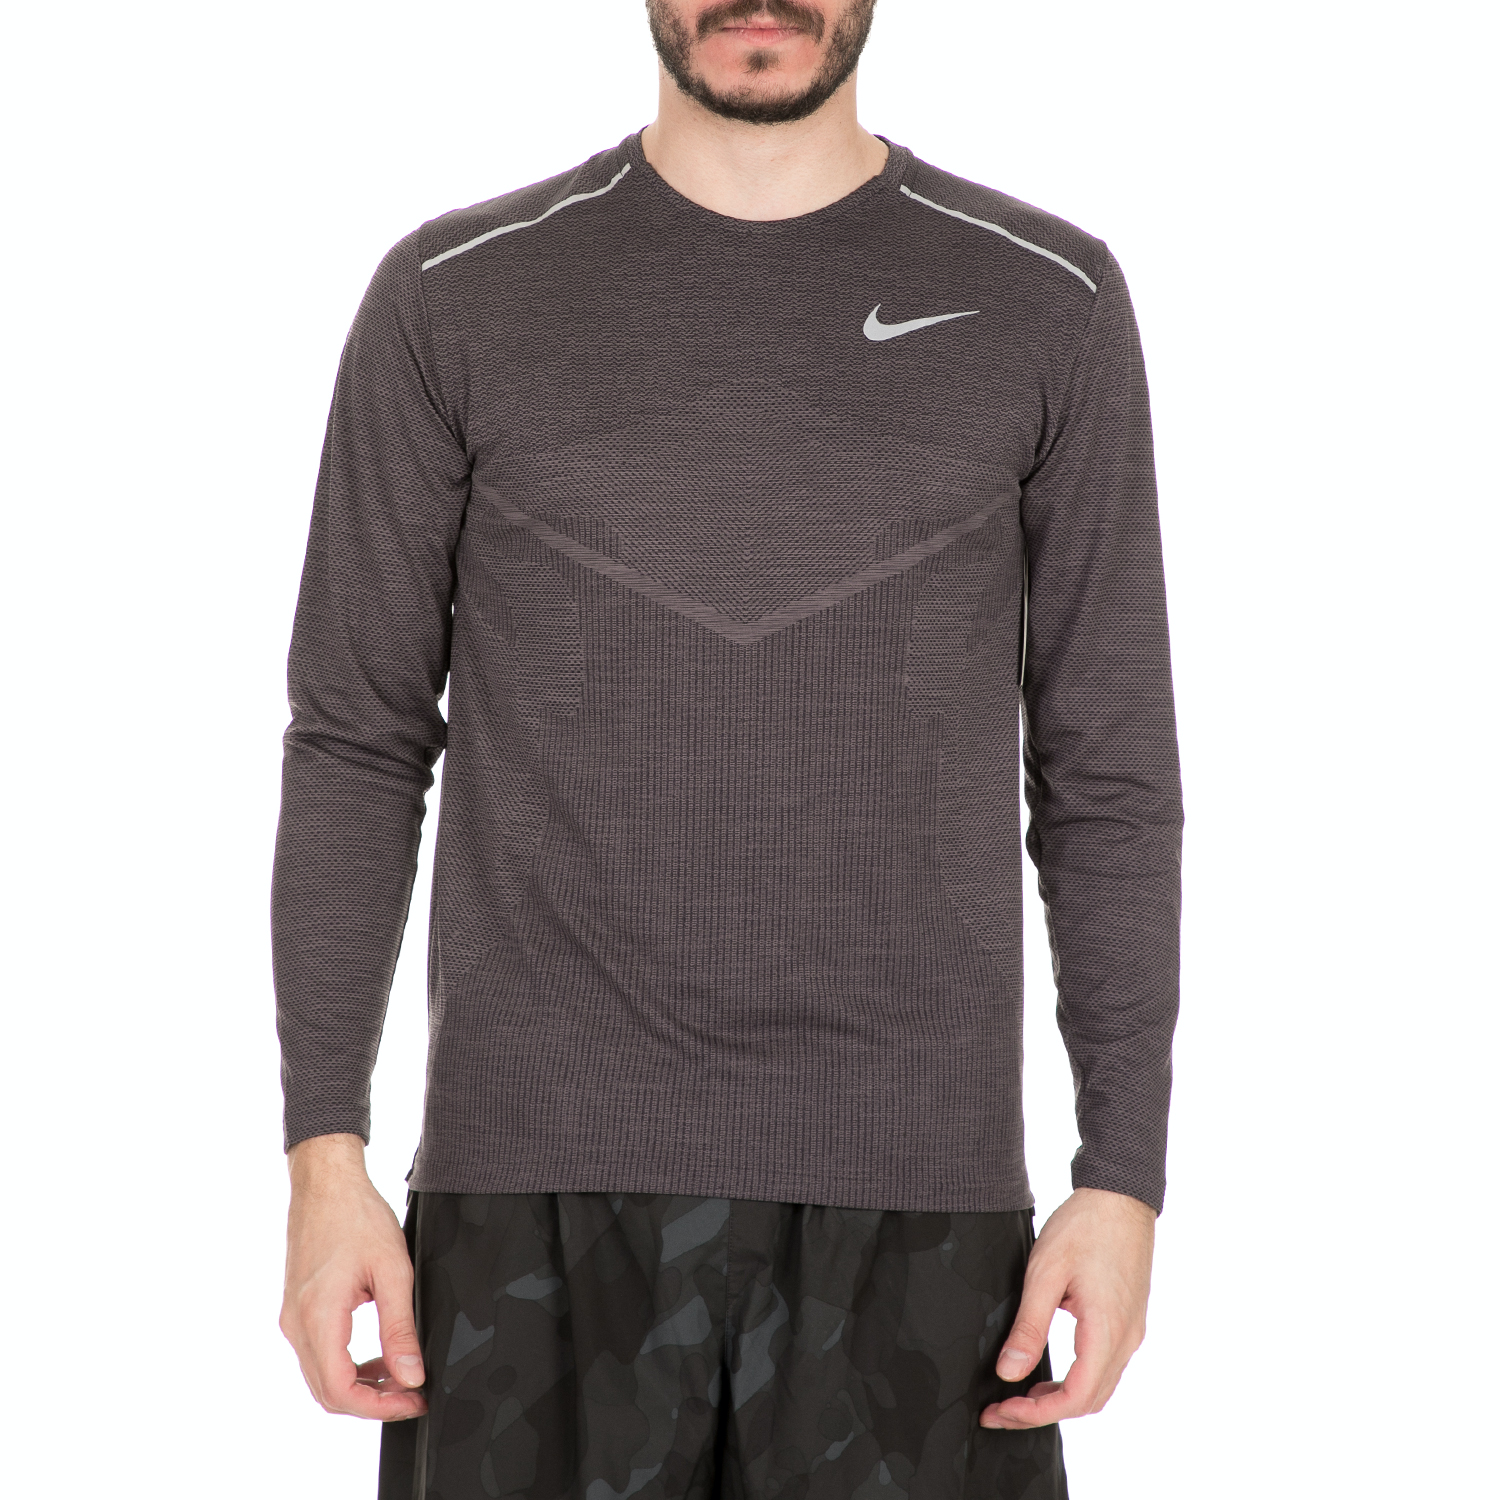 NIKE - Ανδρική μακρυμάνικη μπλούζα για τρέξιμο NIKE TECHKNIT ULTRA LS γκρι Ανδρικά/Ρούχα/Αθλητικά/Φούτερ-Μακρυμάνικα